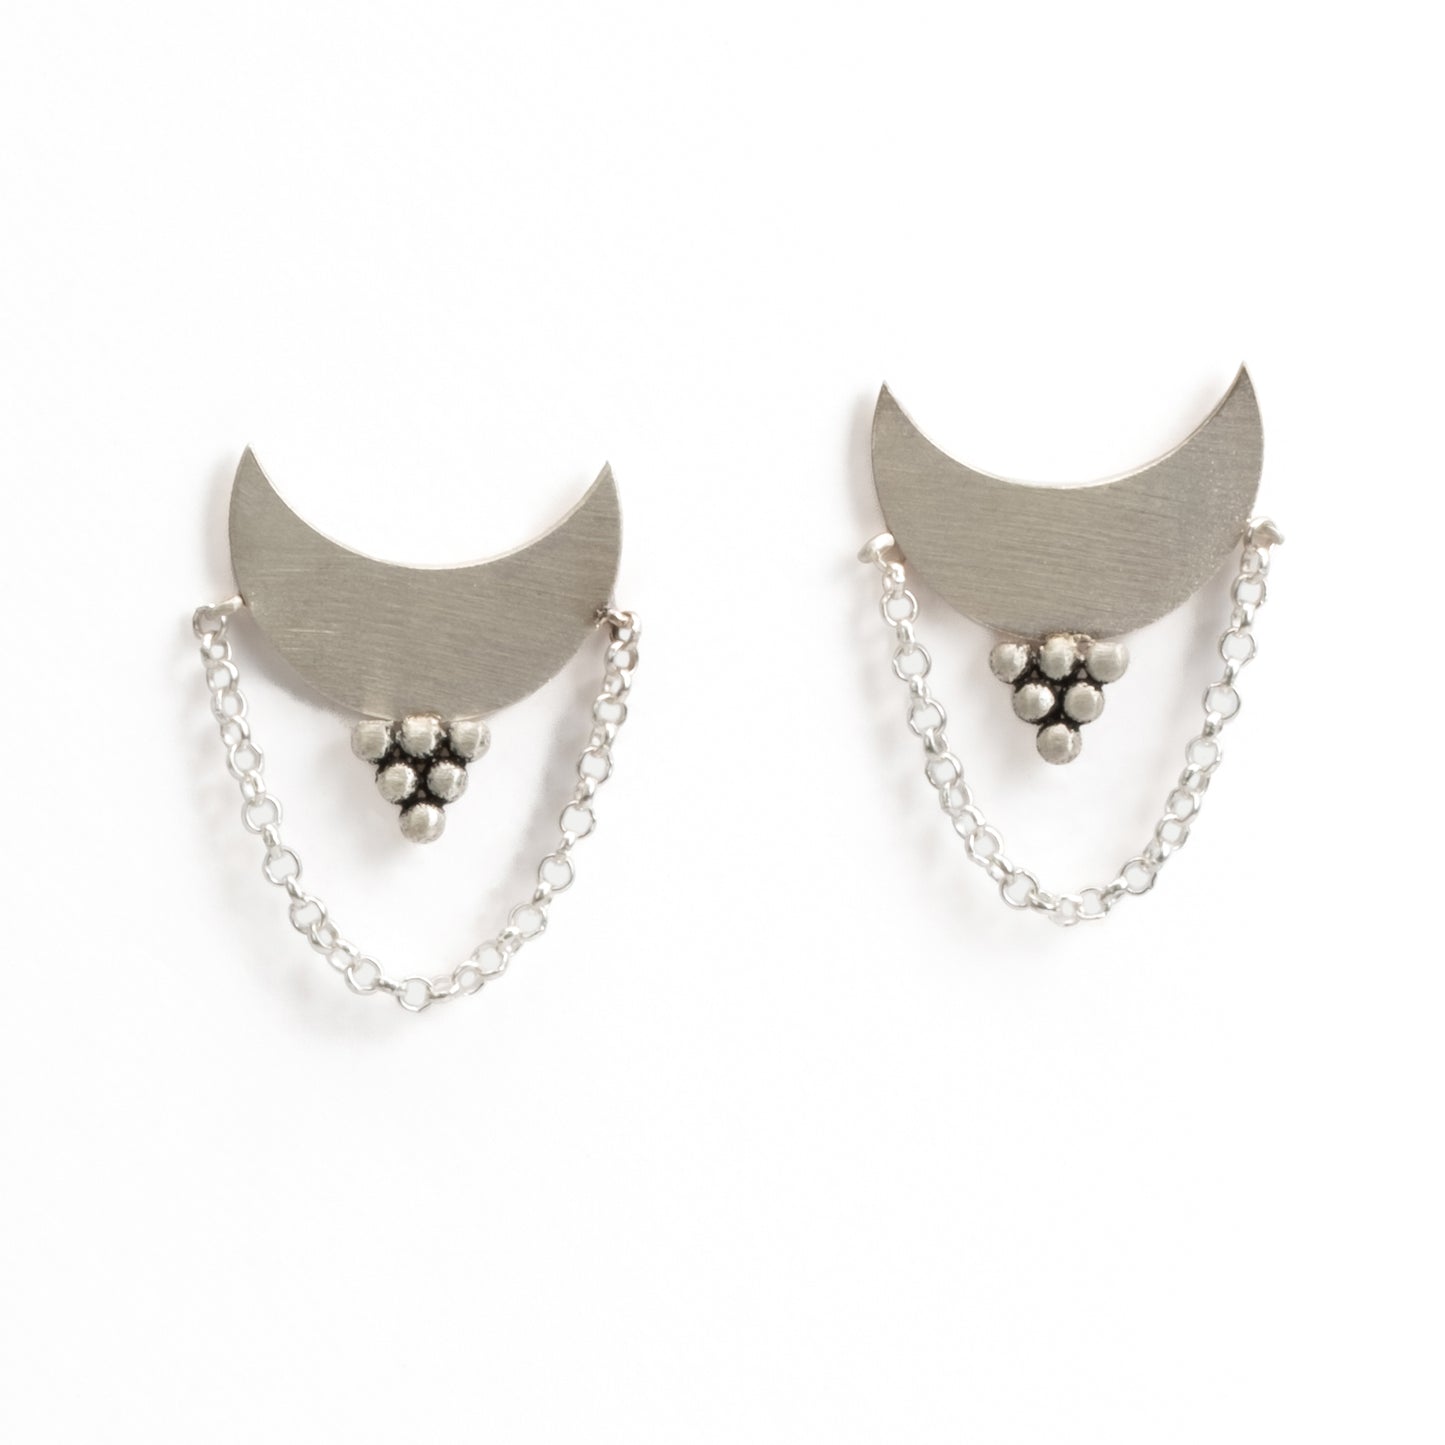 Half Moon Grape Pattern Earrings with Silver Chain